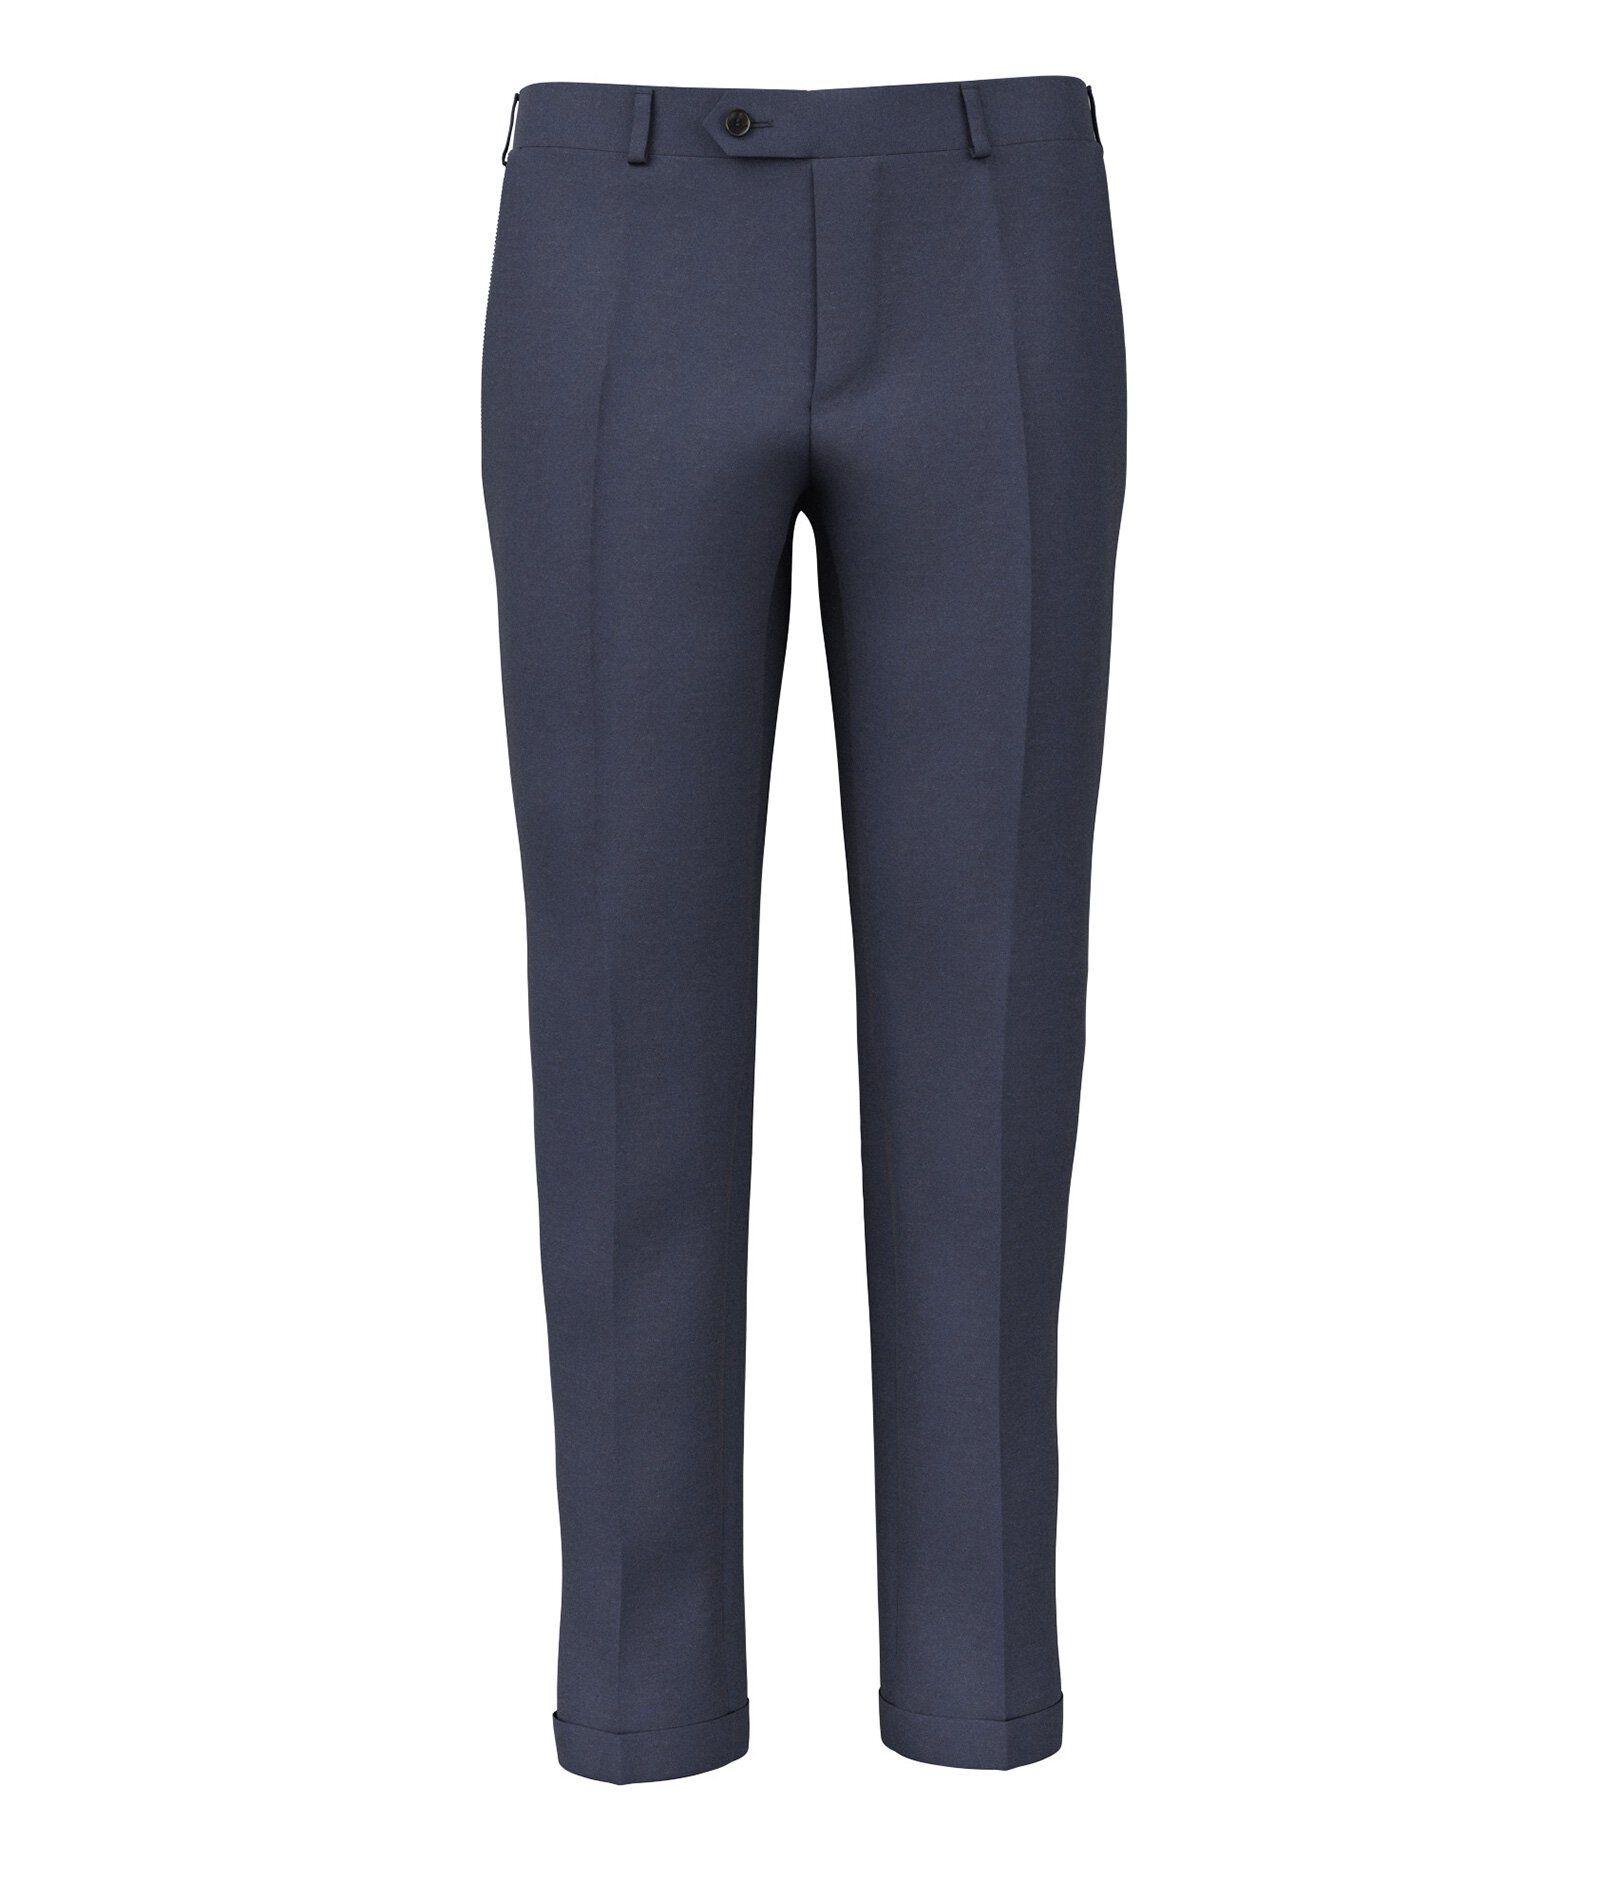 Made Suits Singapore Tailor  Tailor Made Pants  Custom Tailored Pants   Bespoke Trousers Slacks